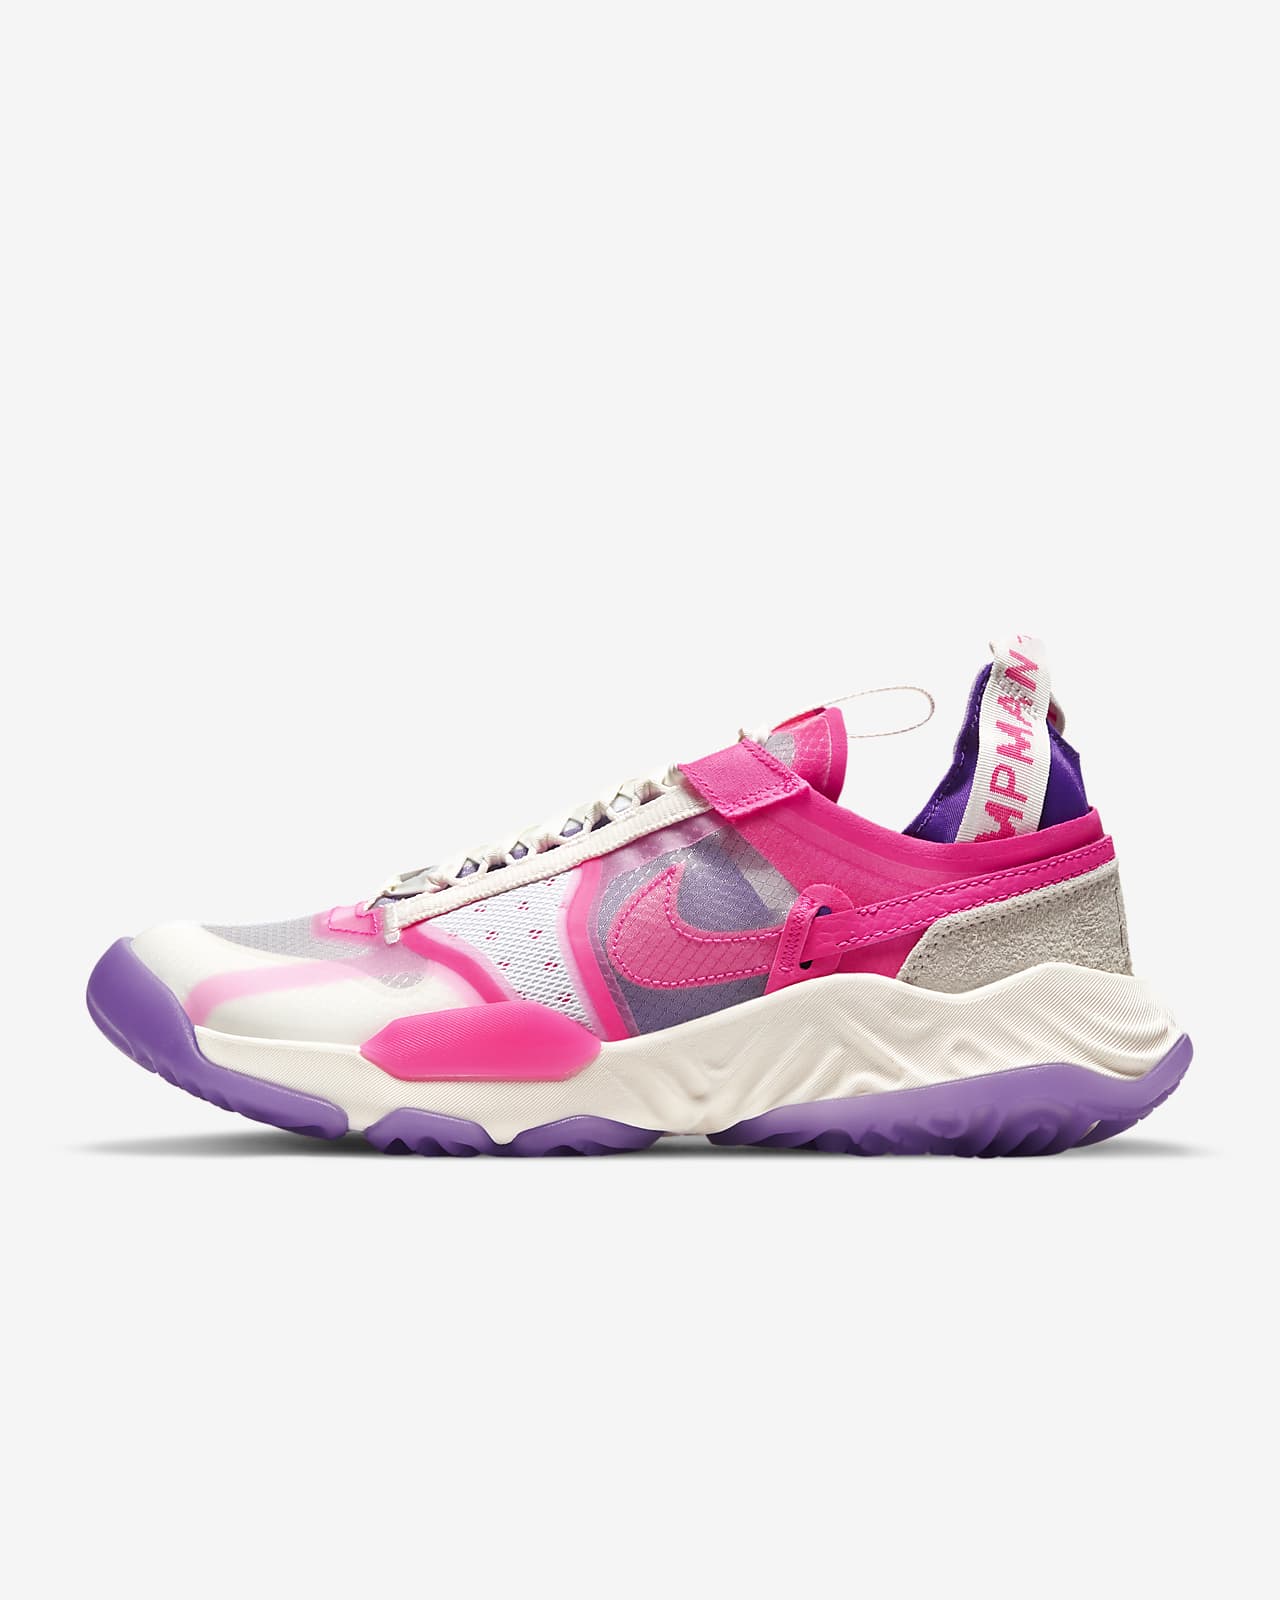 purple jordan womens shoes